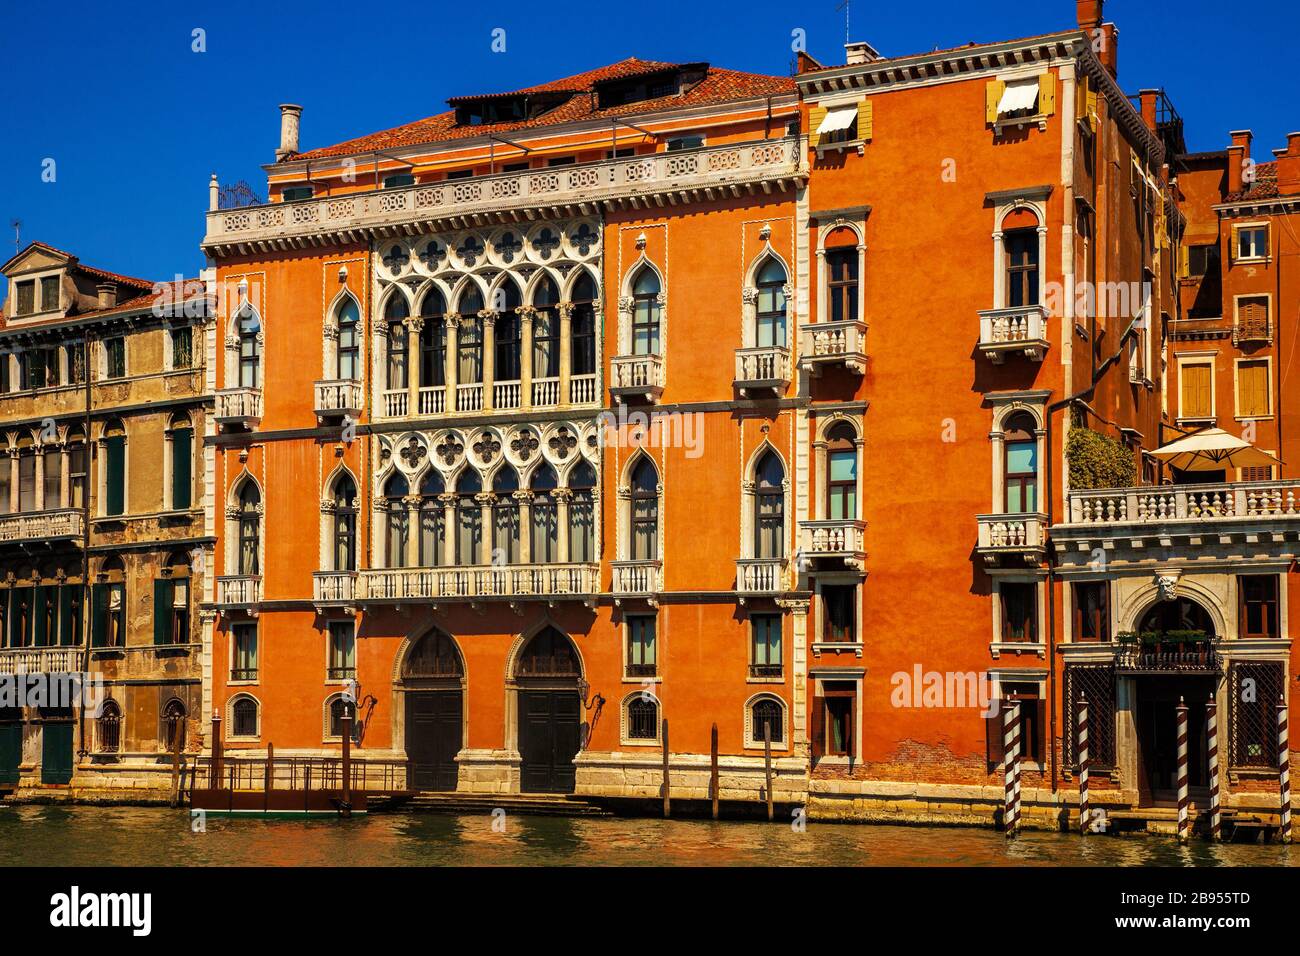 Building in Venice, Italy Stock Photo